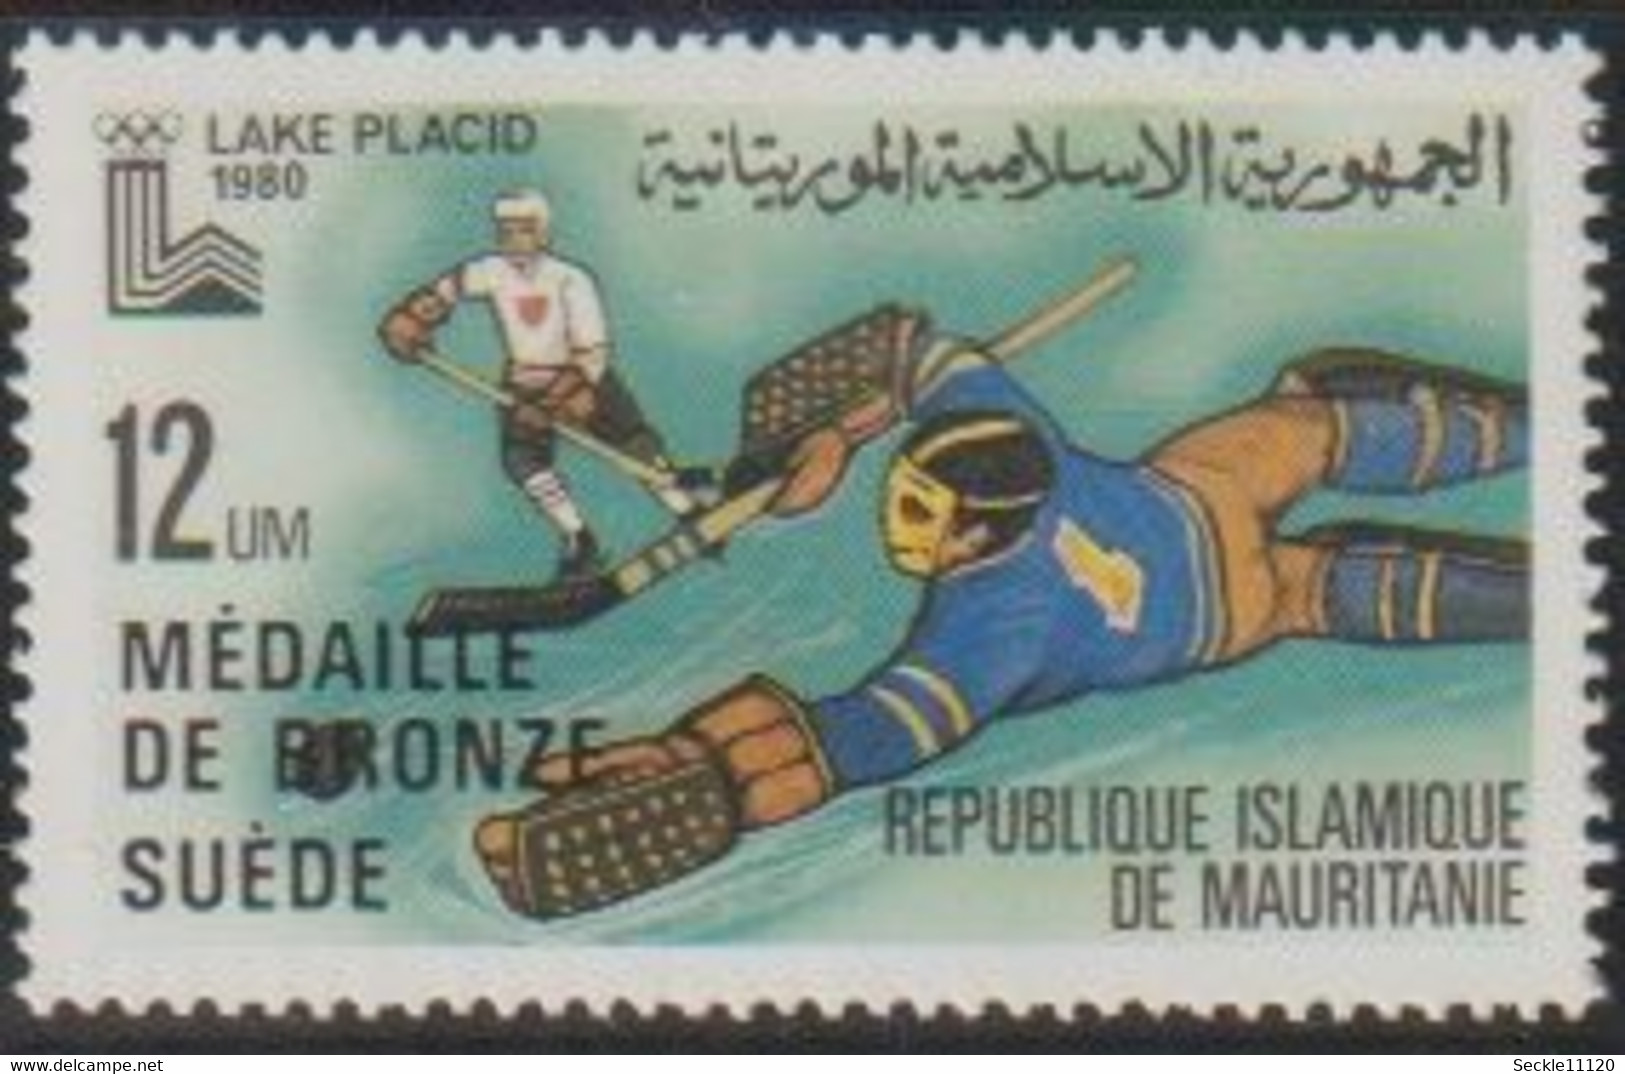 Mauritanie Mauritania - 1979 - 439 / 444 - JO De Lacke Placid - MNH - Mauritanie (1960-...)